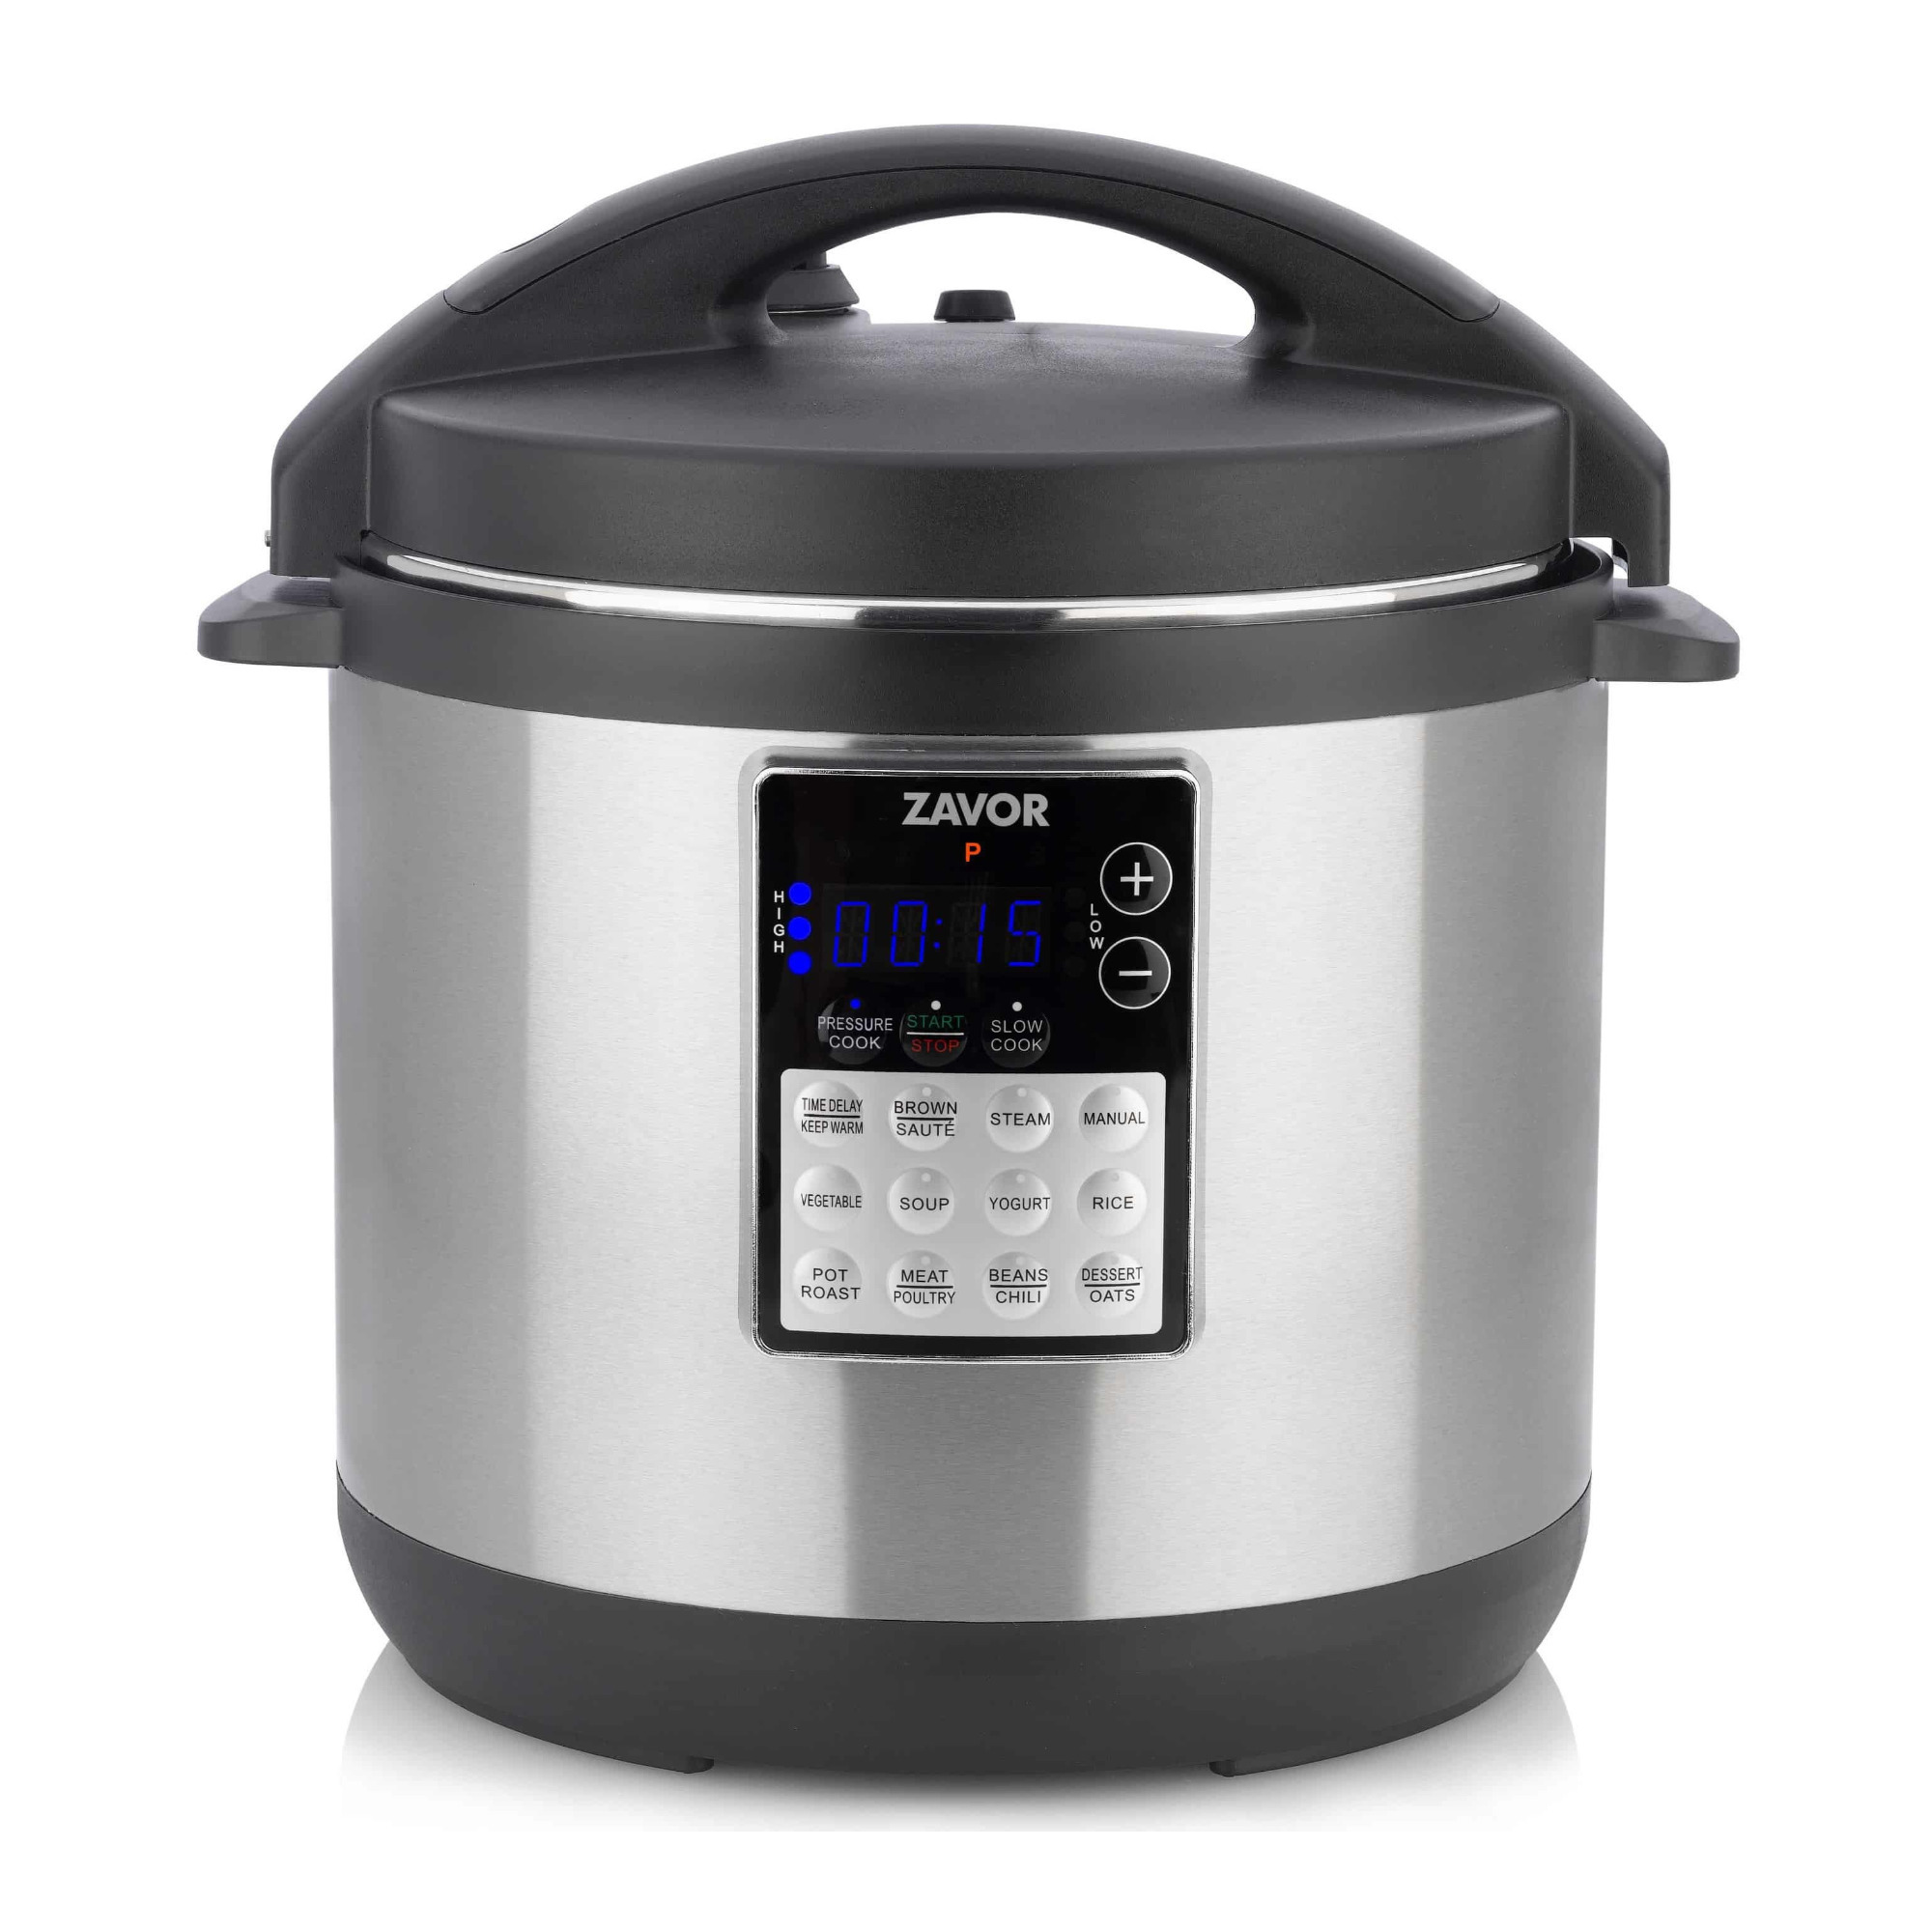 Zavor LUX Edge, 8 Quart Programmable Electric Multi-Cooker: Pressure Cooker, Slow Cooker, Rice Cooker, Yogurt Maker, Steamer and